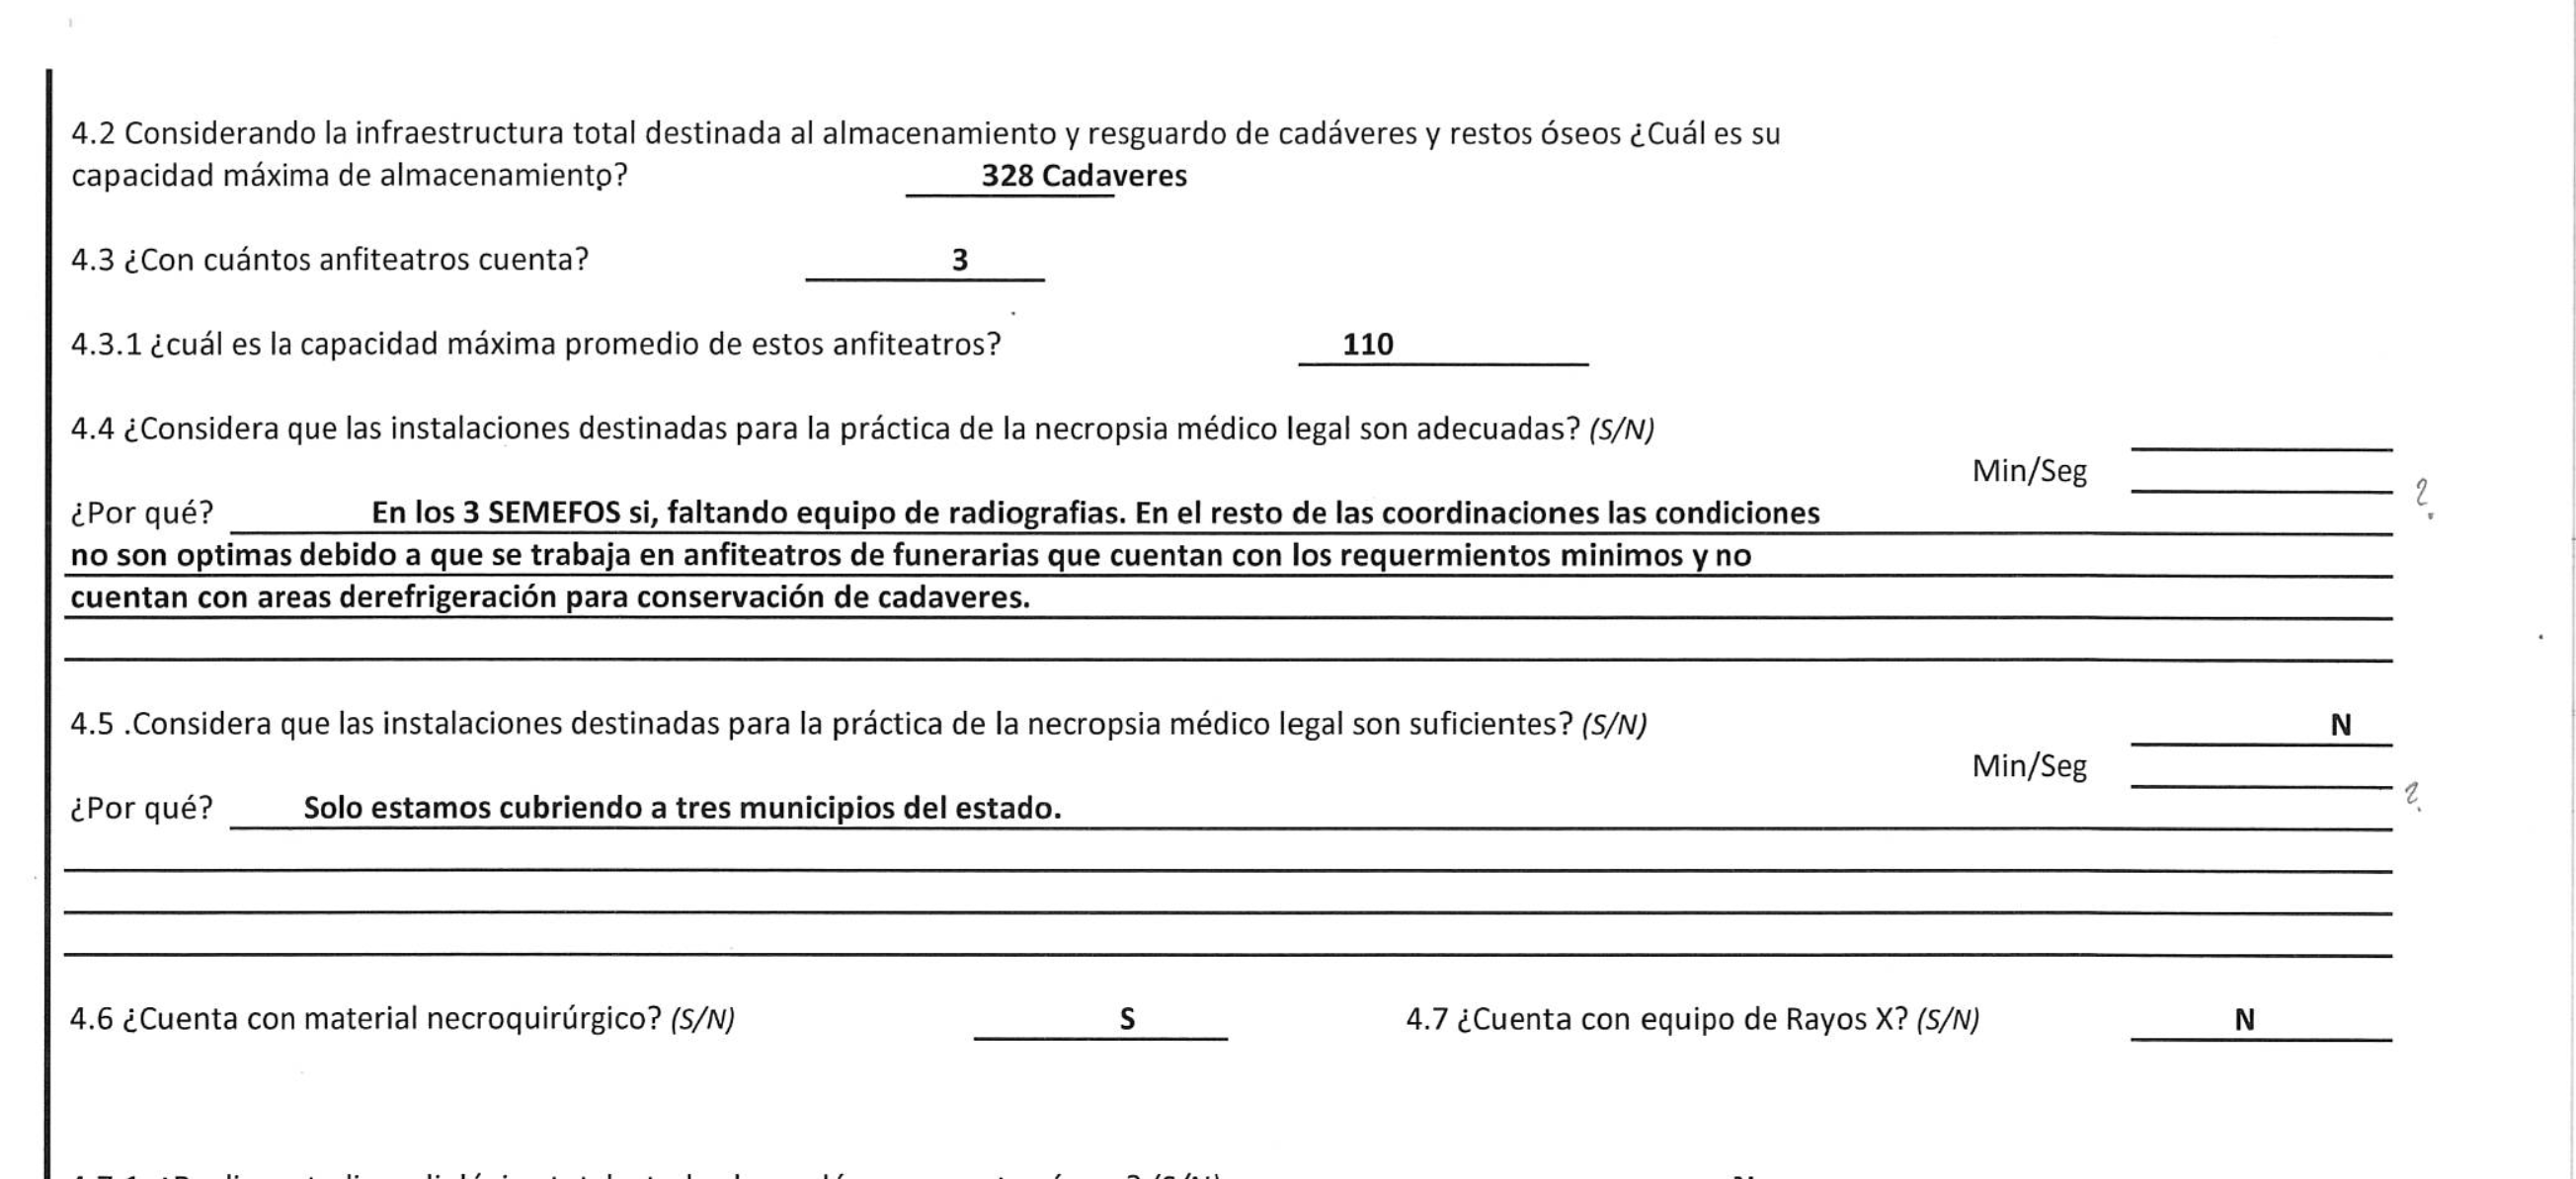 Cuestionario respondido por autoridades forenses de Tamaulipas. Crédito_ Documentos obtenidos vía solicitudes de información pública